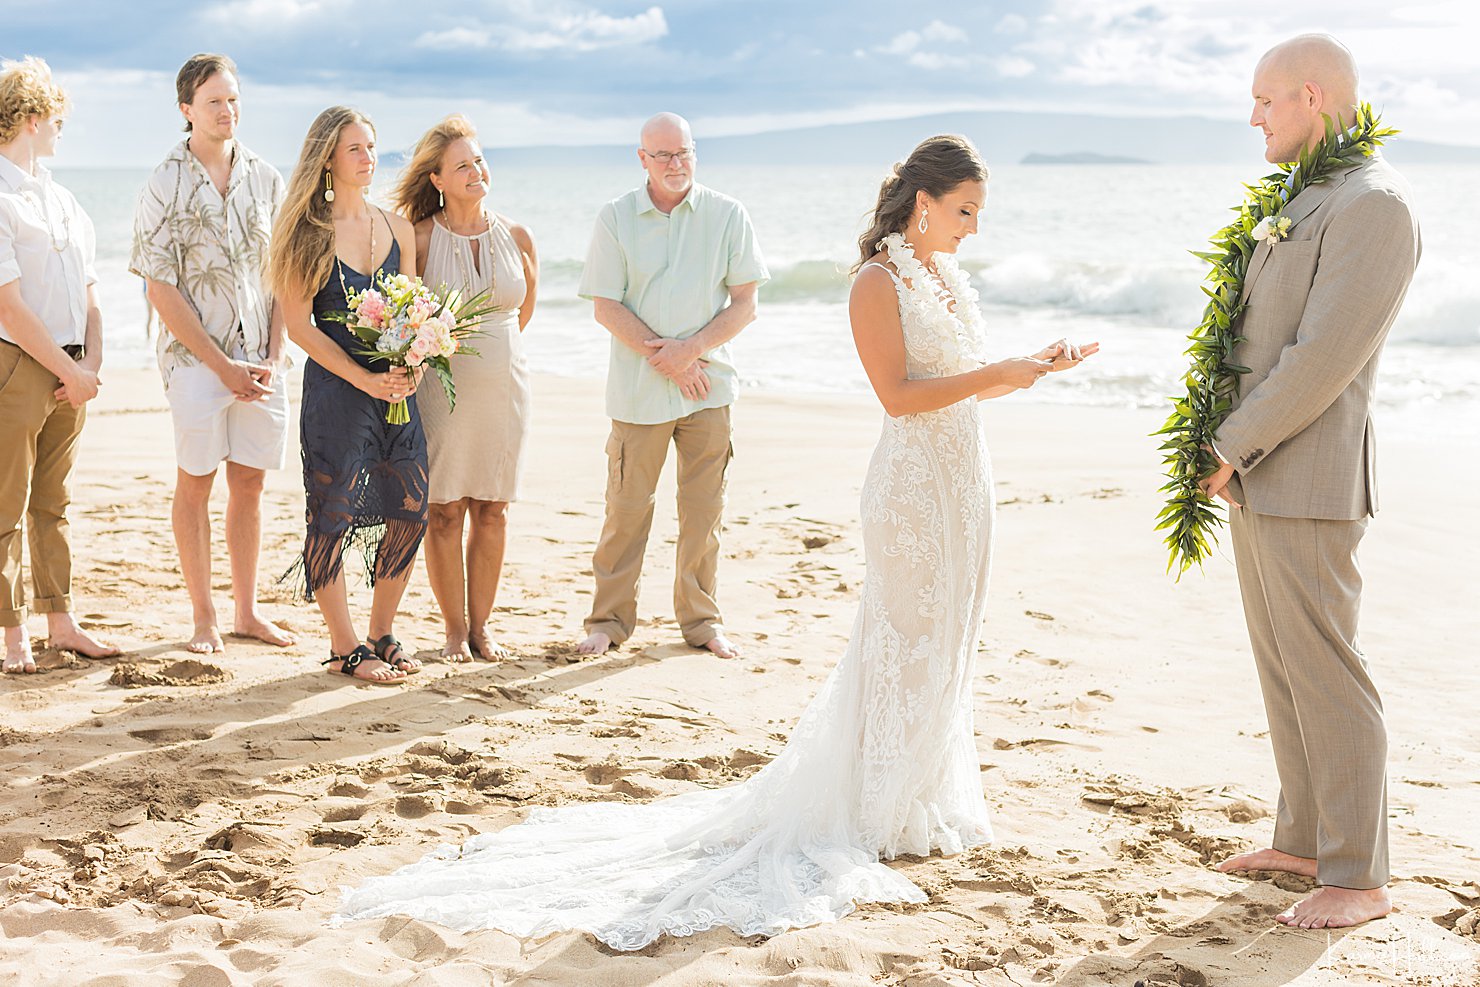 ceremony vows at maui beach wedding